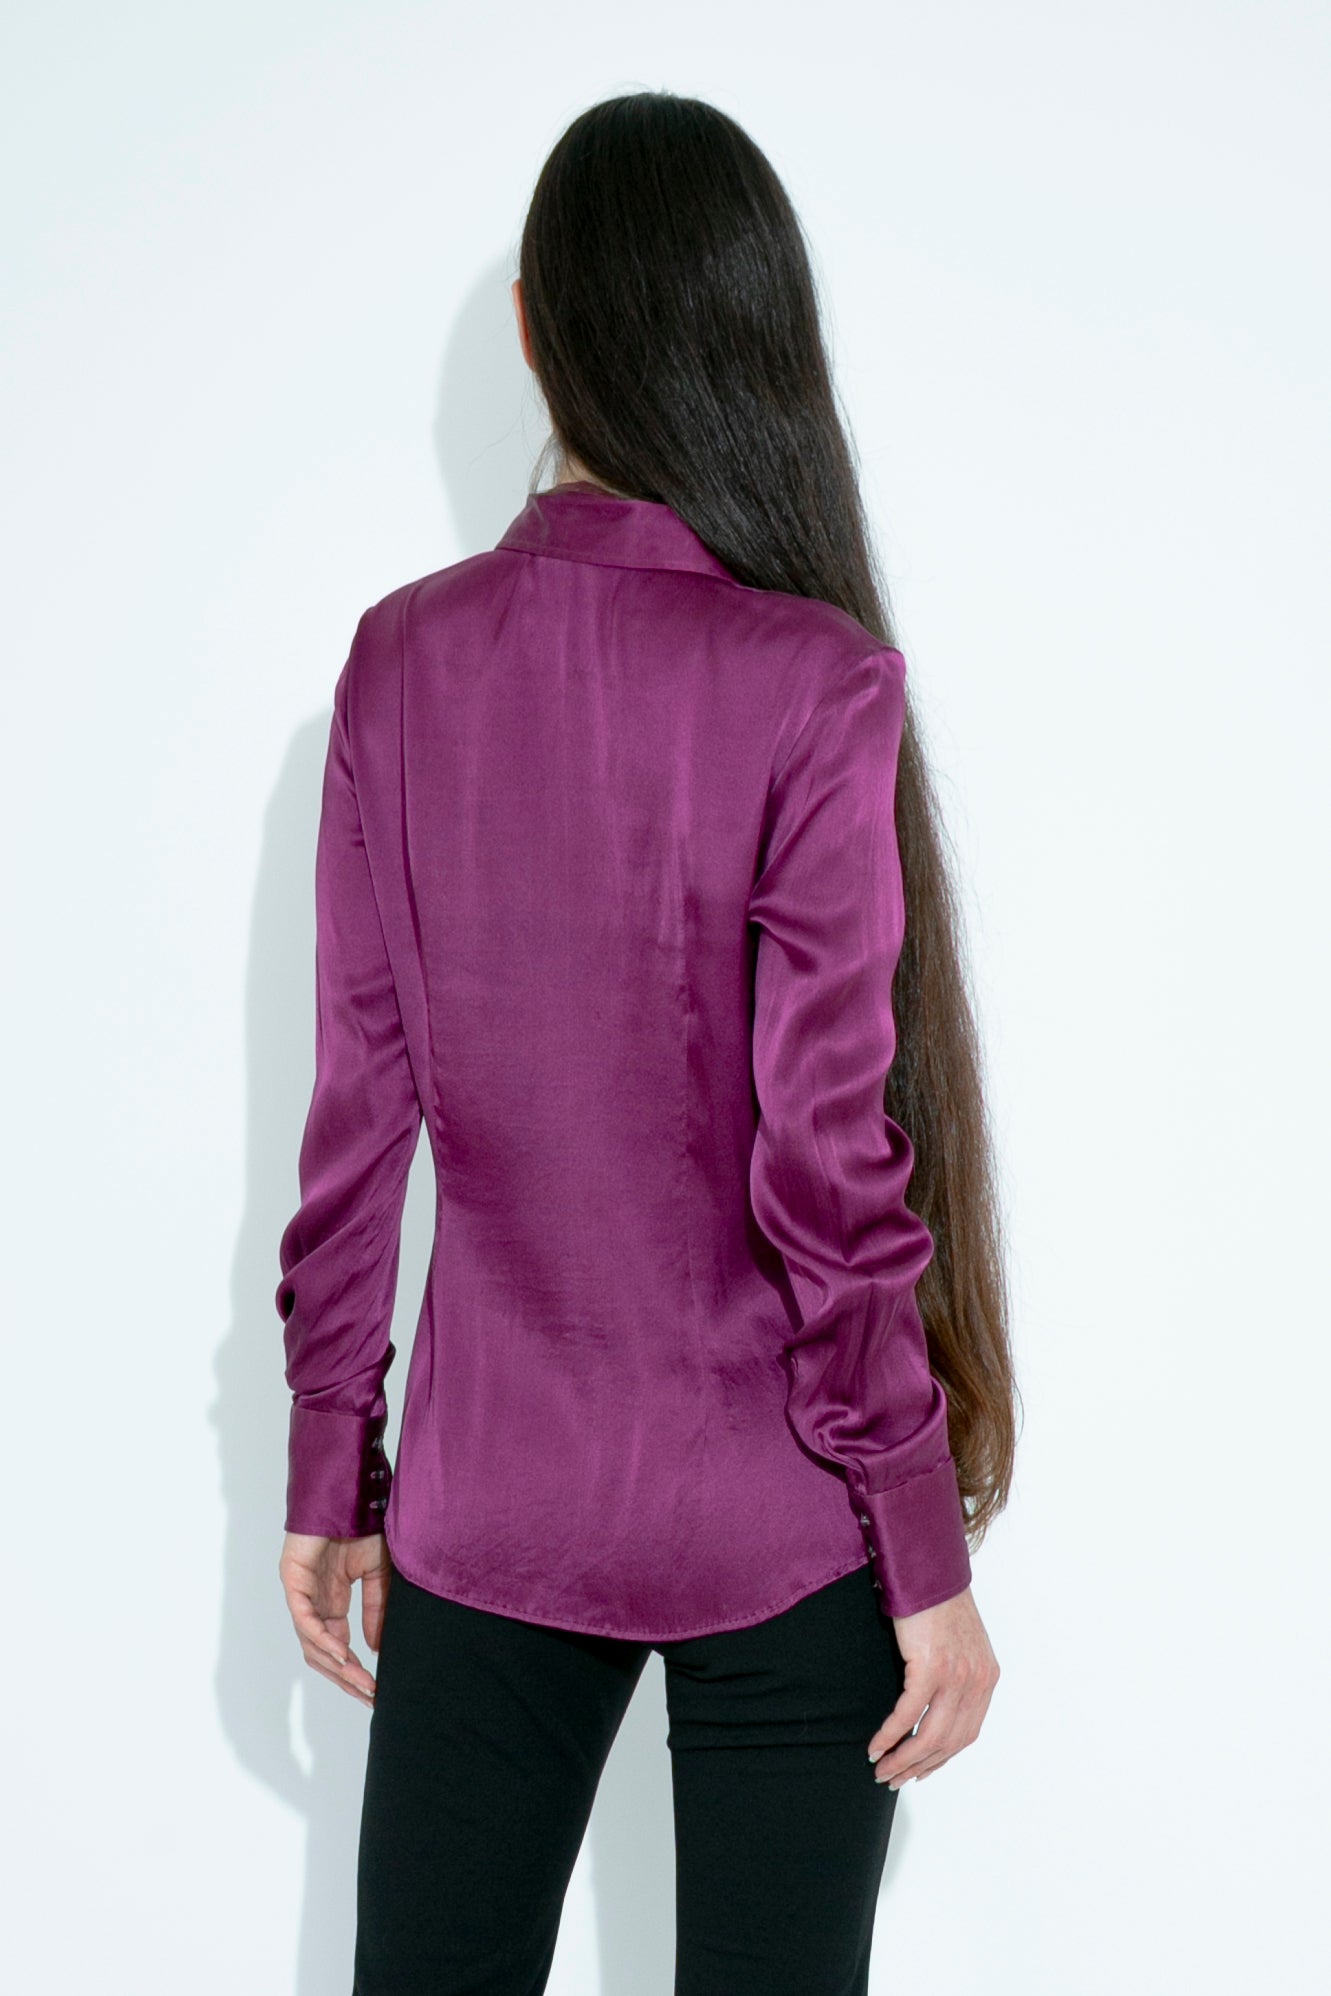 D&G Silk Purple Blouse